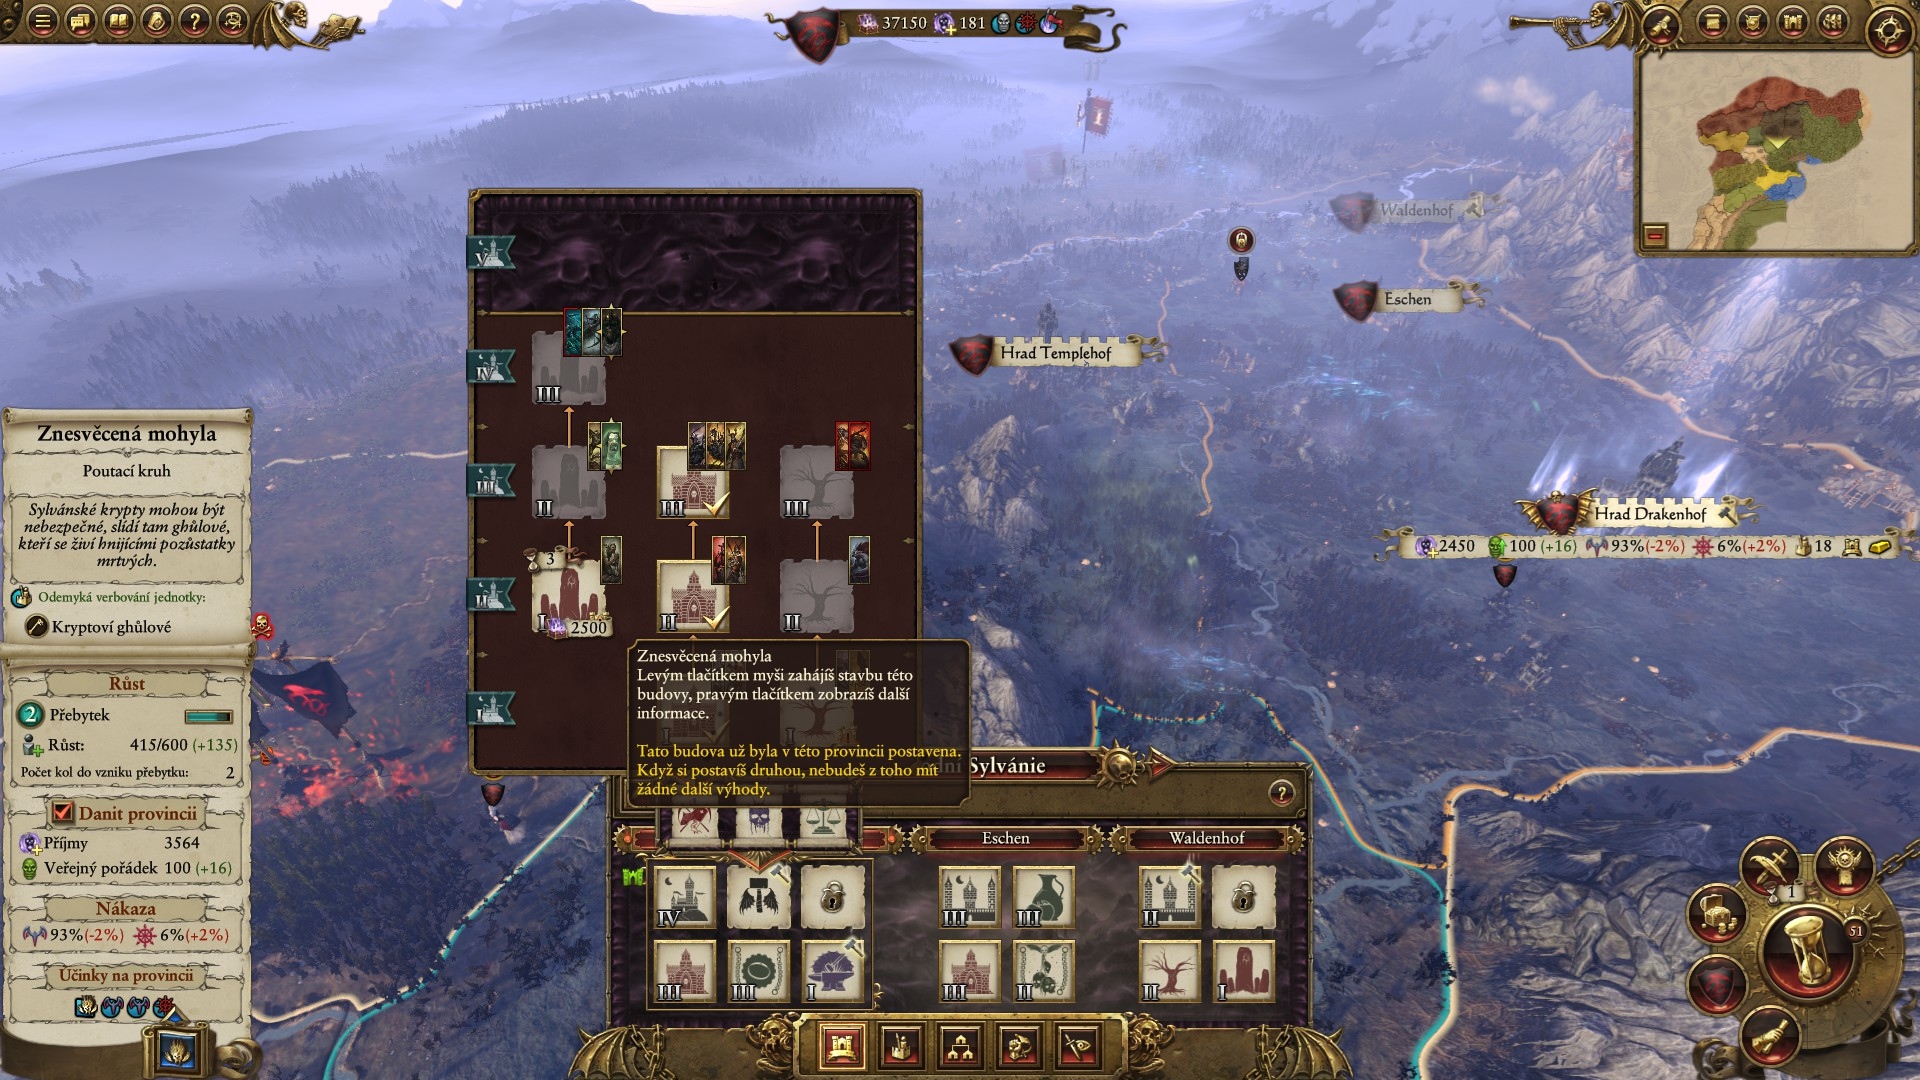 Total War: Warhammer Manament miest je vecn, zaloen hlavne na pristavovan budov.